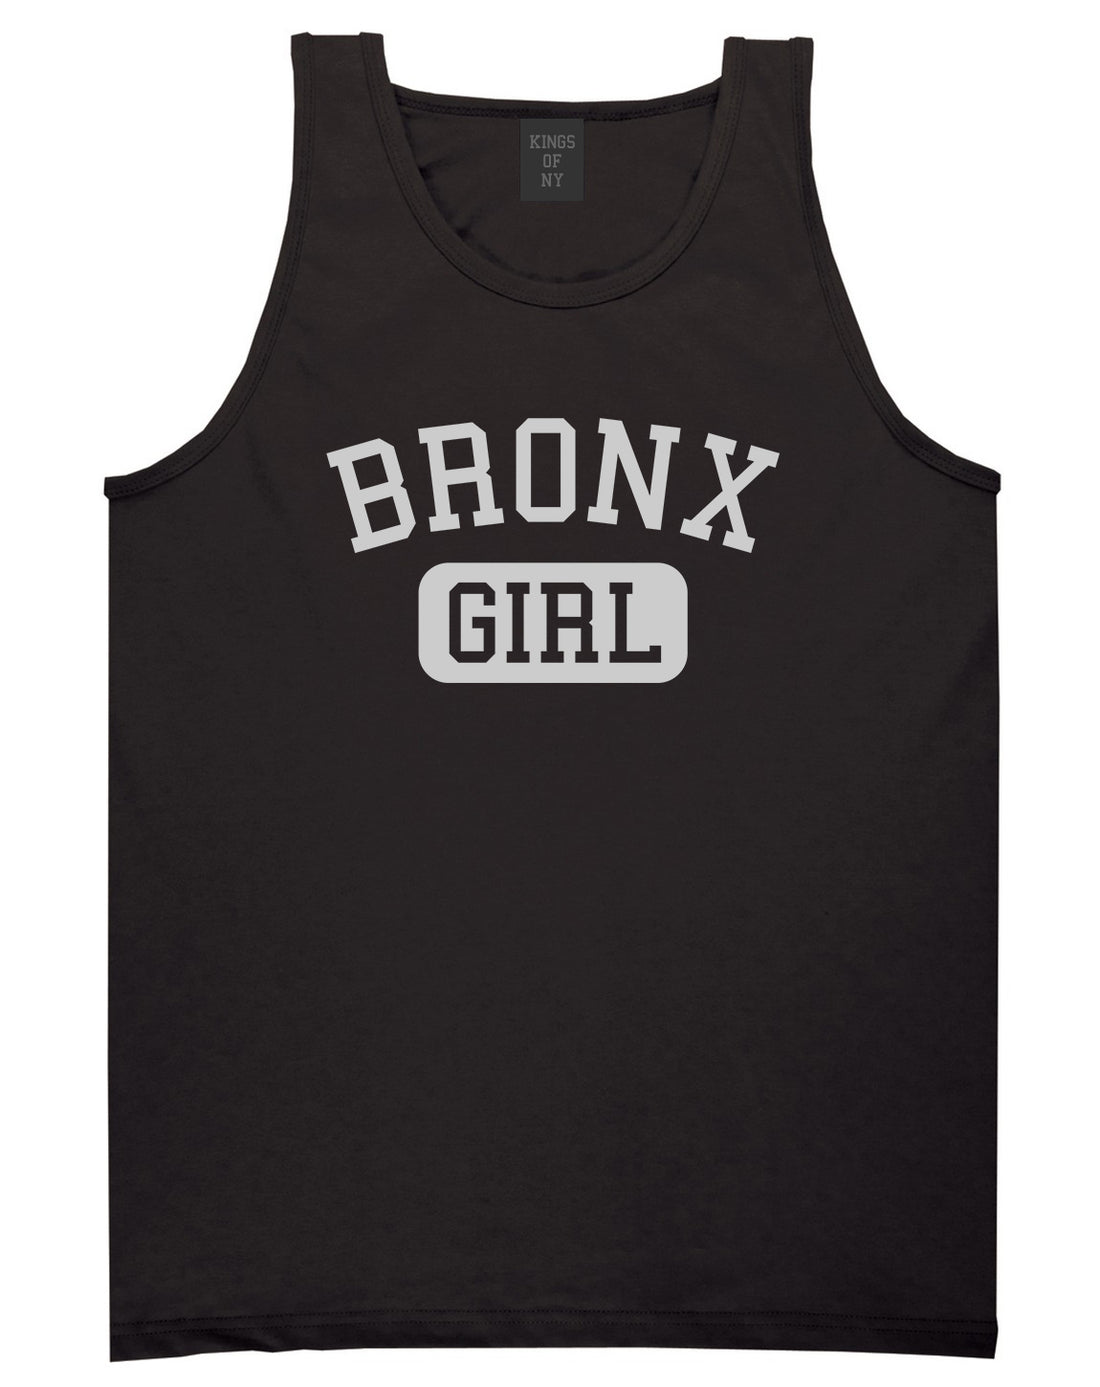 Bronx Girl New York Mens Tank Top T-Shirt Black